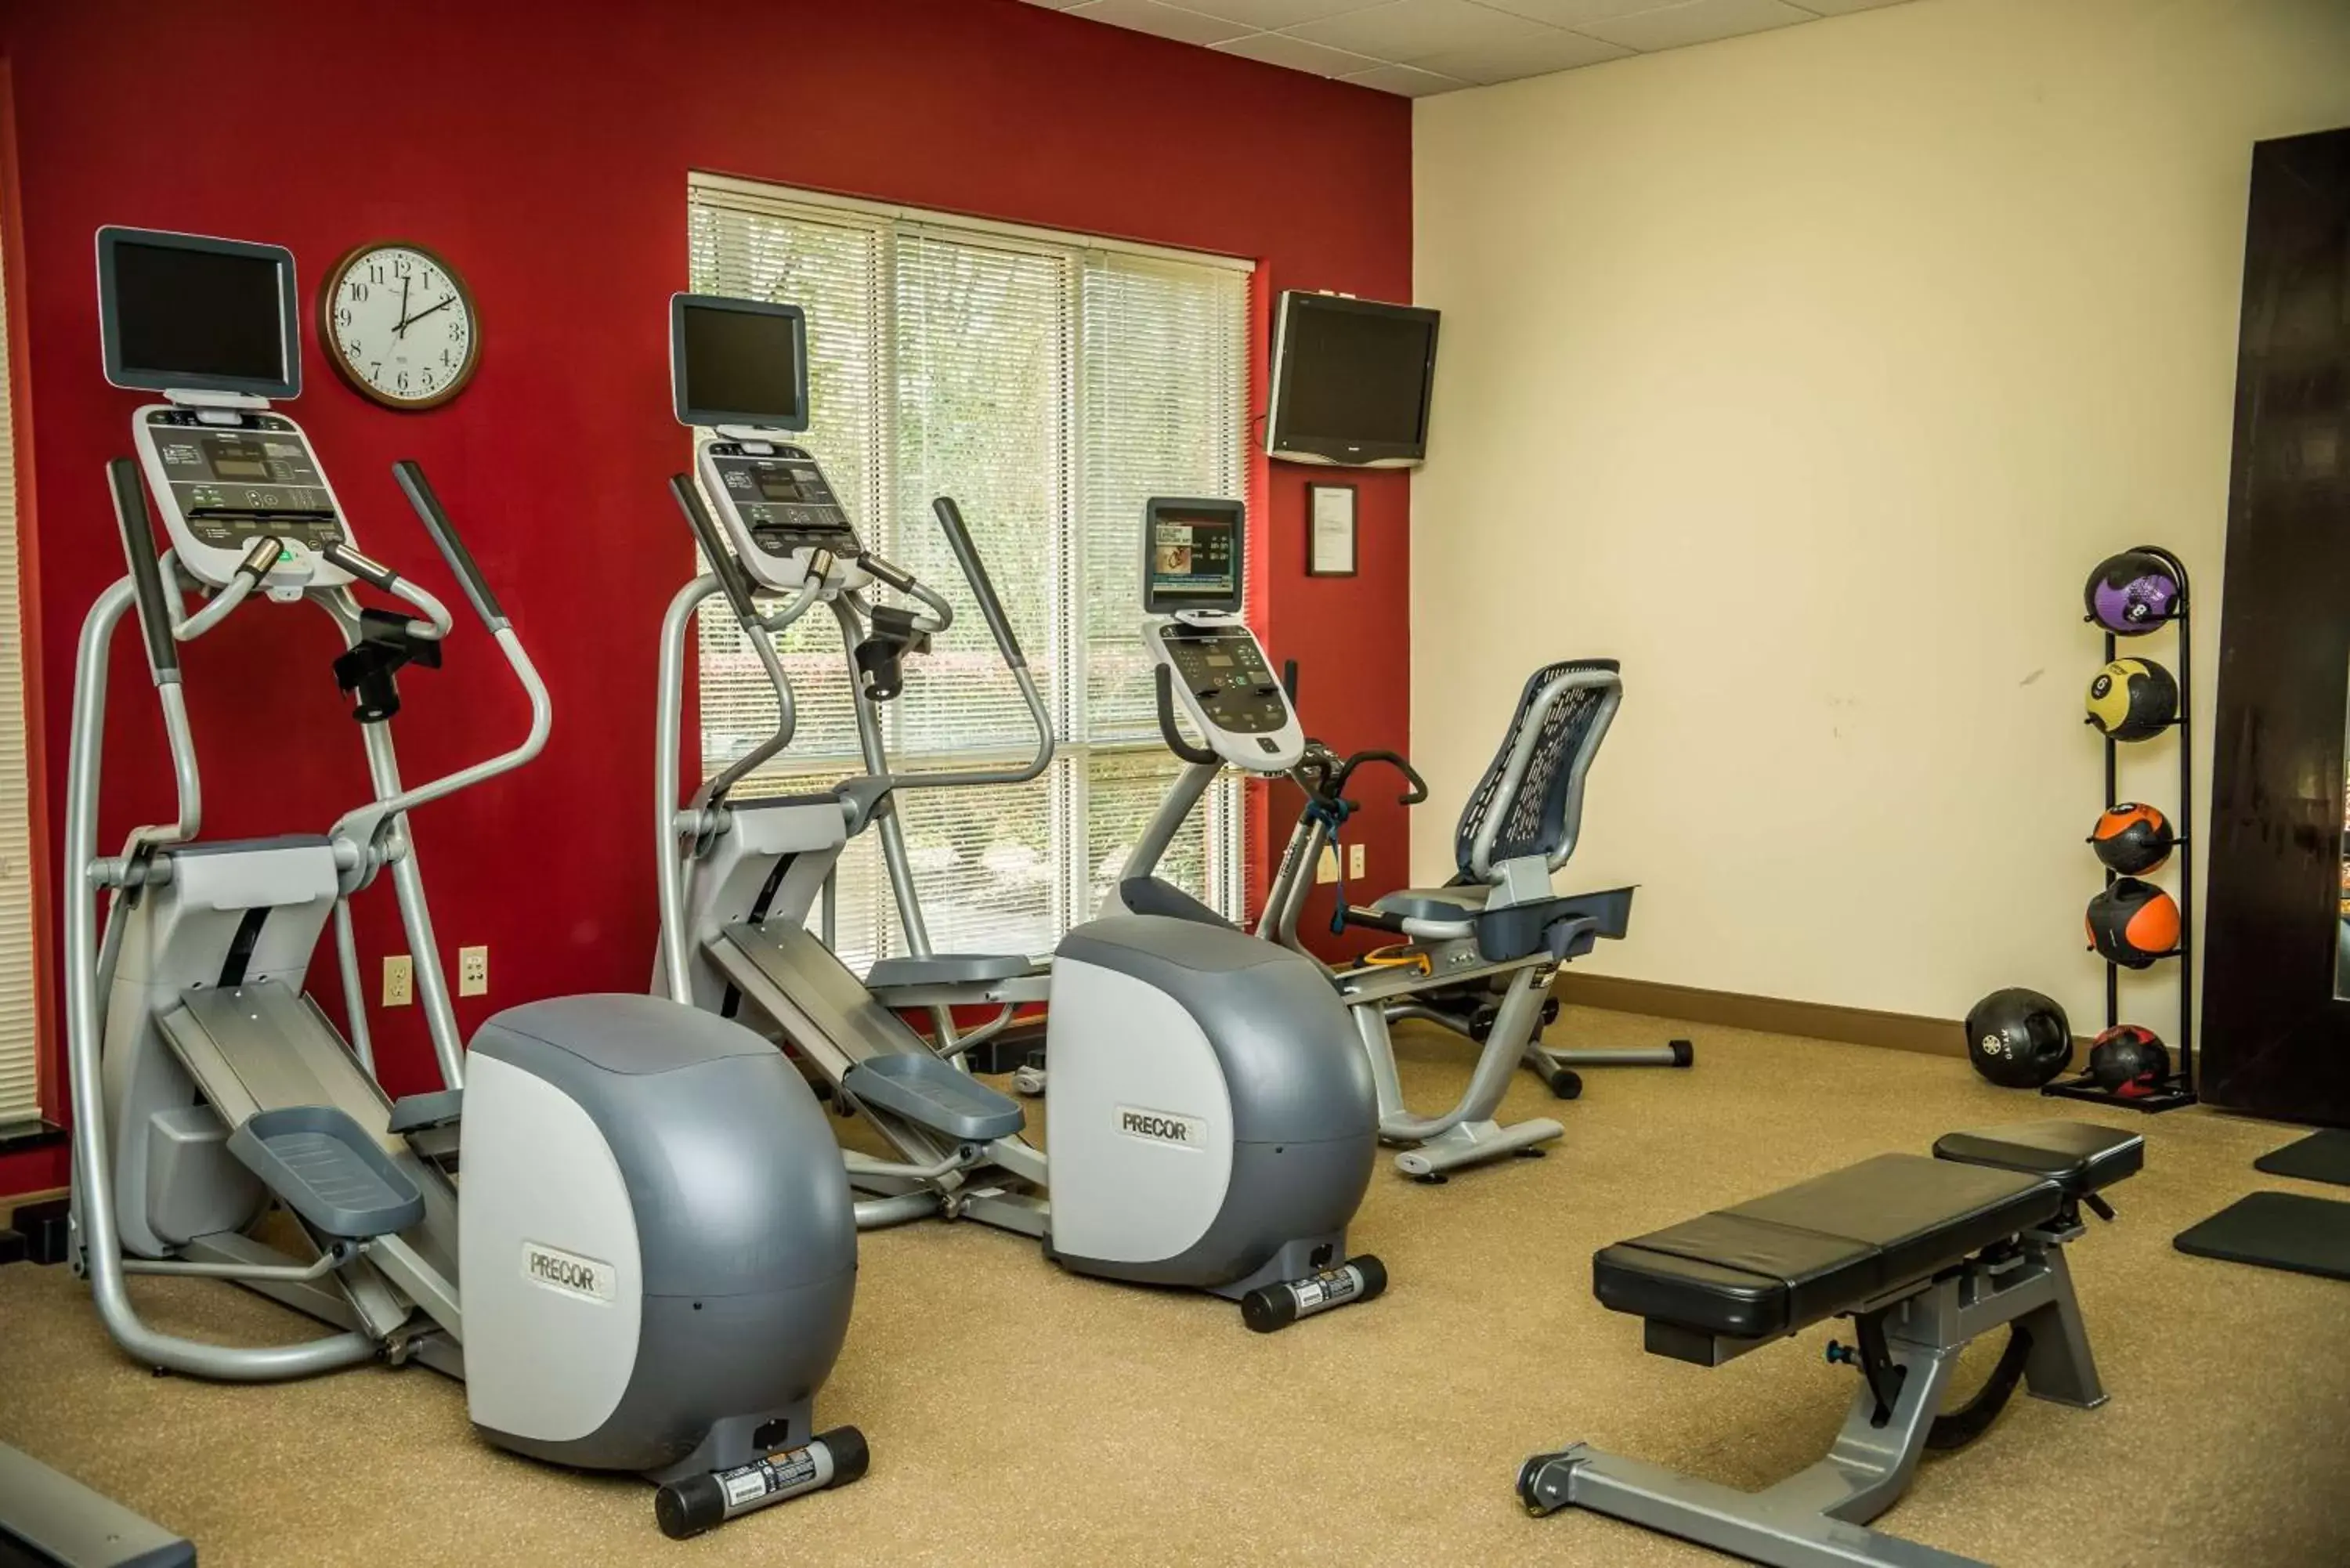 Fitness centre/facilities, Fitness Center/Facilities in Hilton Garden Inn Lexington Georgetown